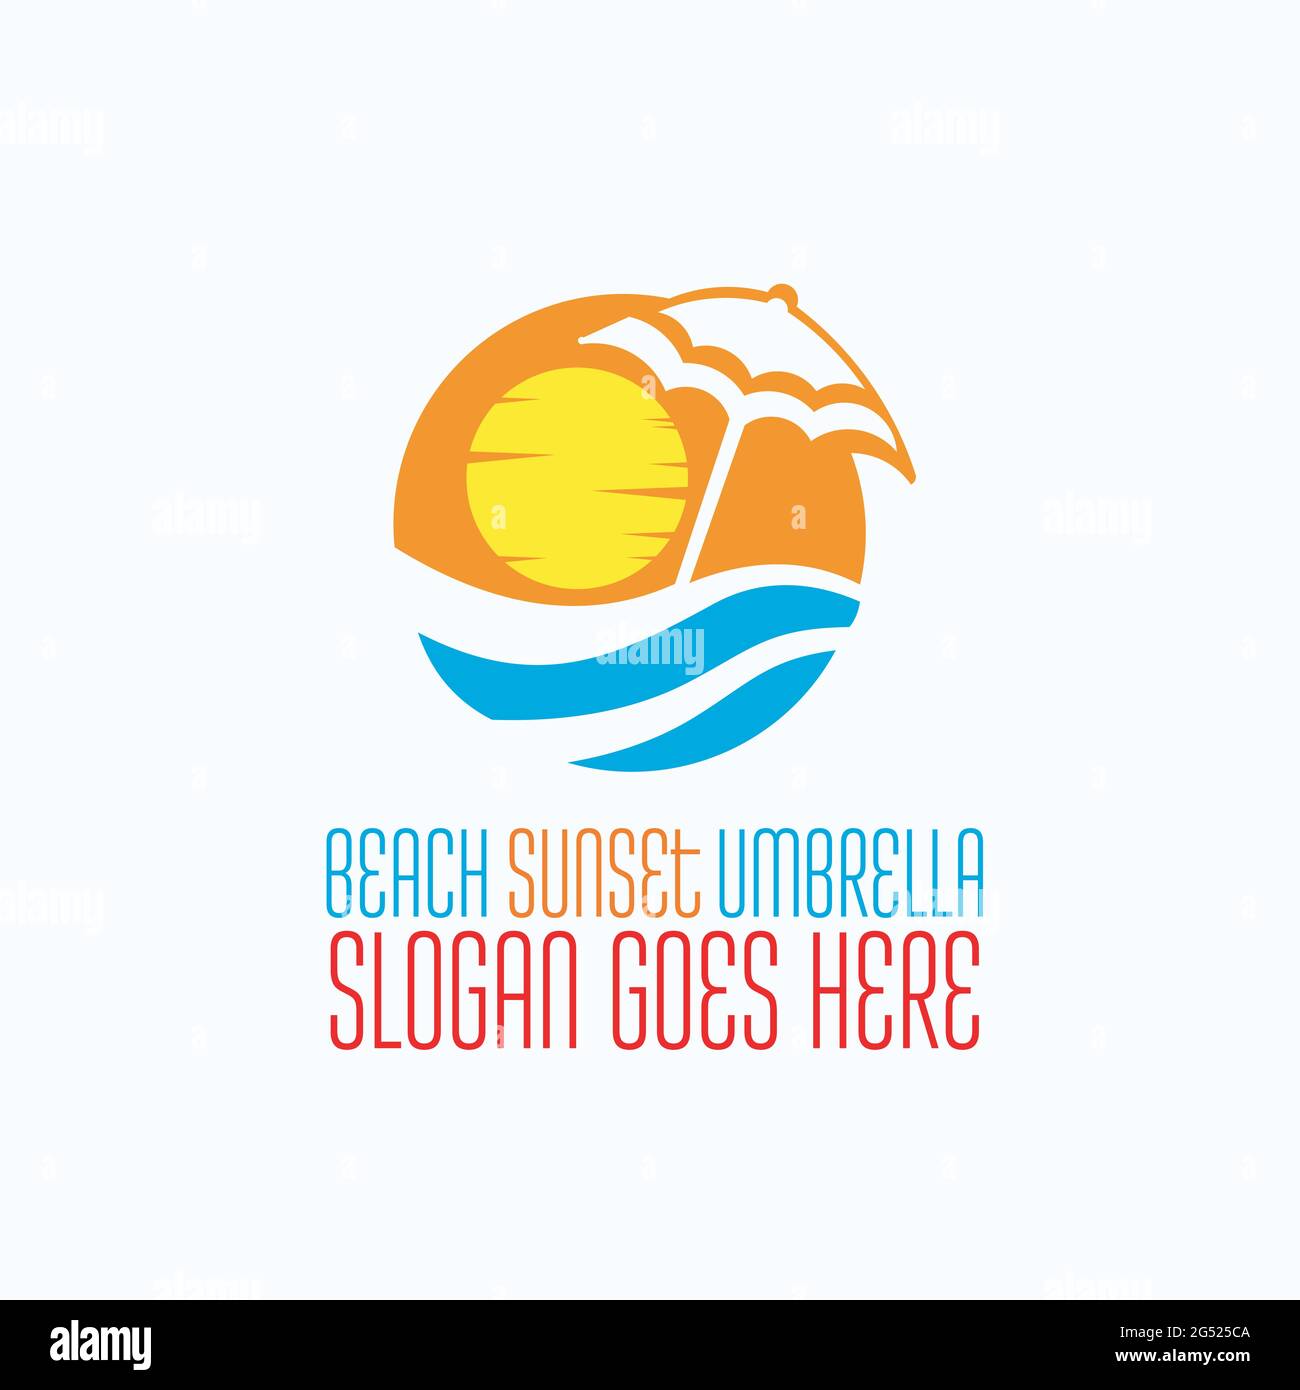 beach sunset umbrella logo exclusive design inspiration Stock Vector